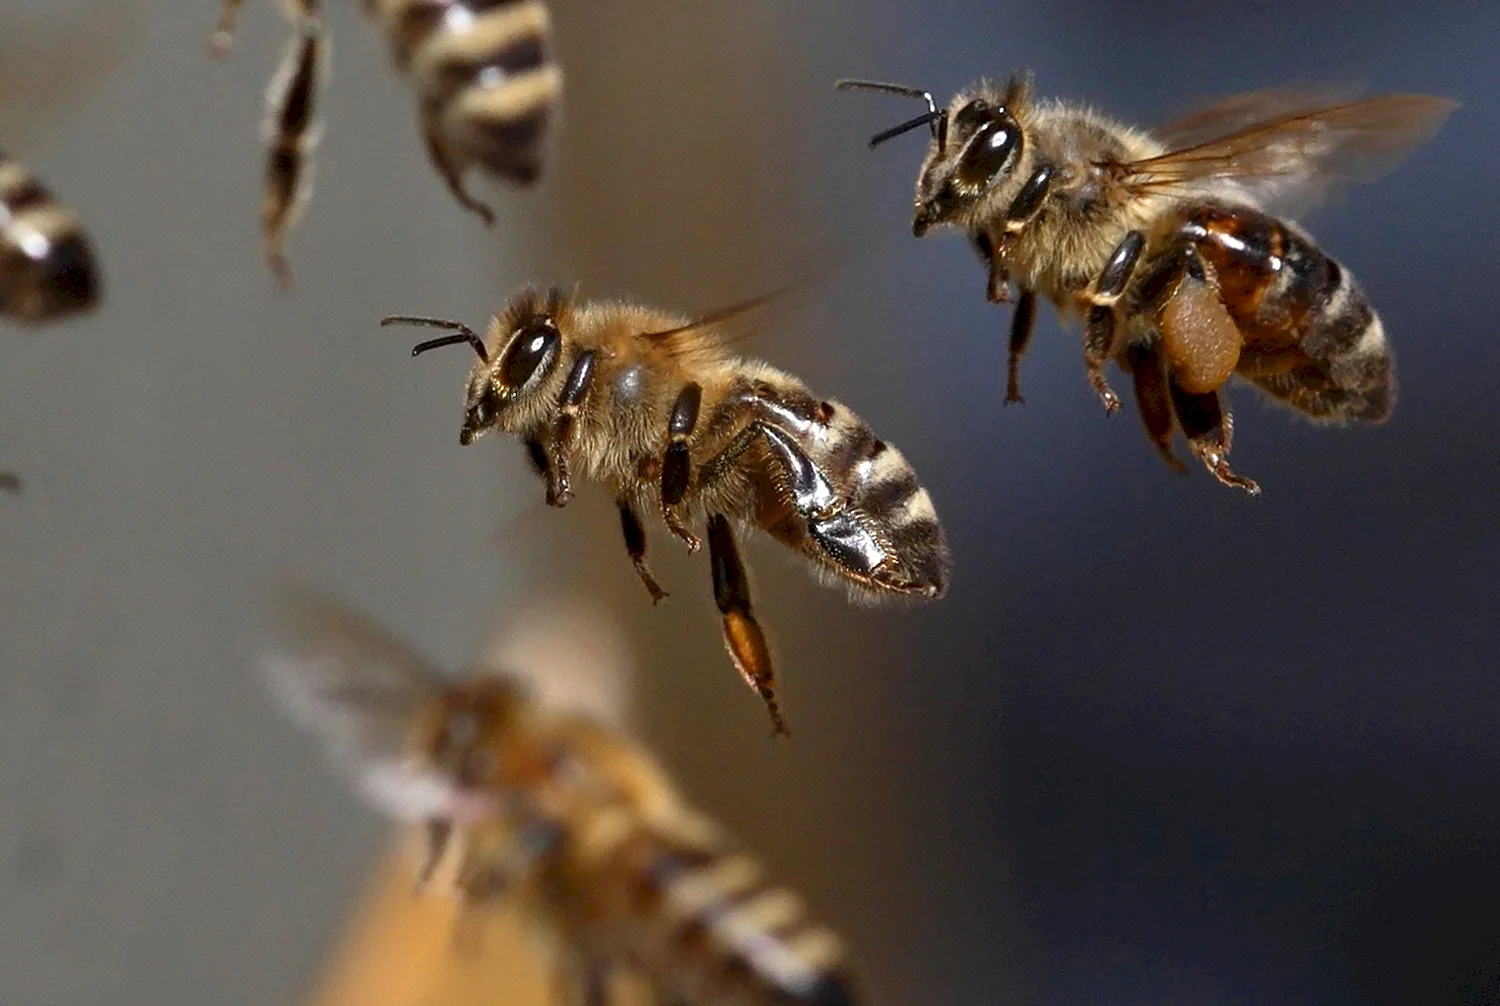 Пчелы атакуют